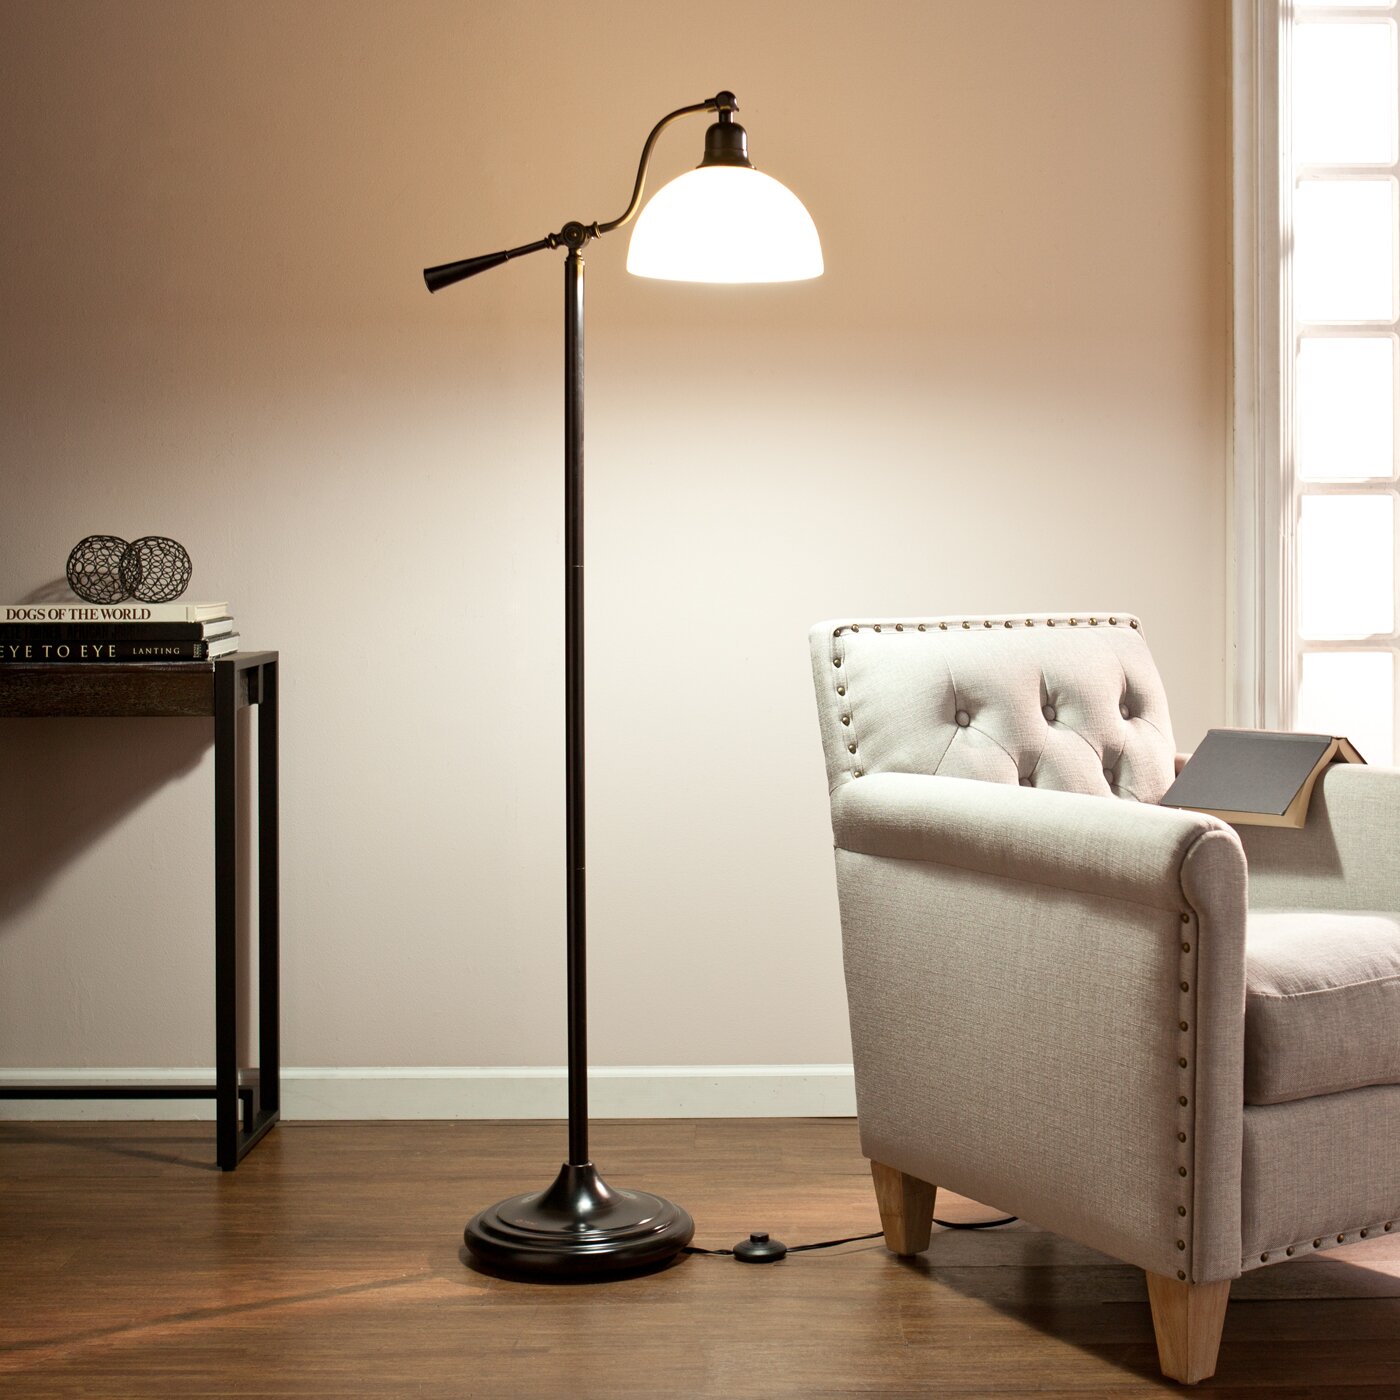 Ottlite Floor Lamp - OttLite - Cambridge Floor Lamp - Included with